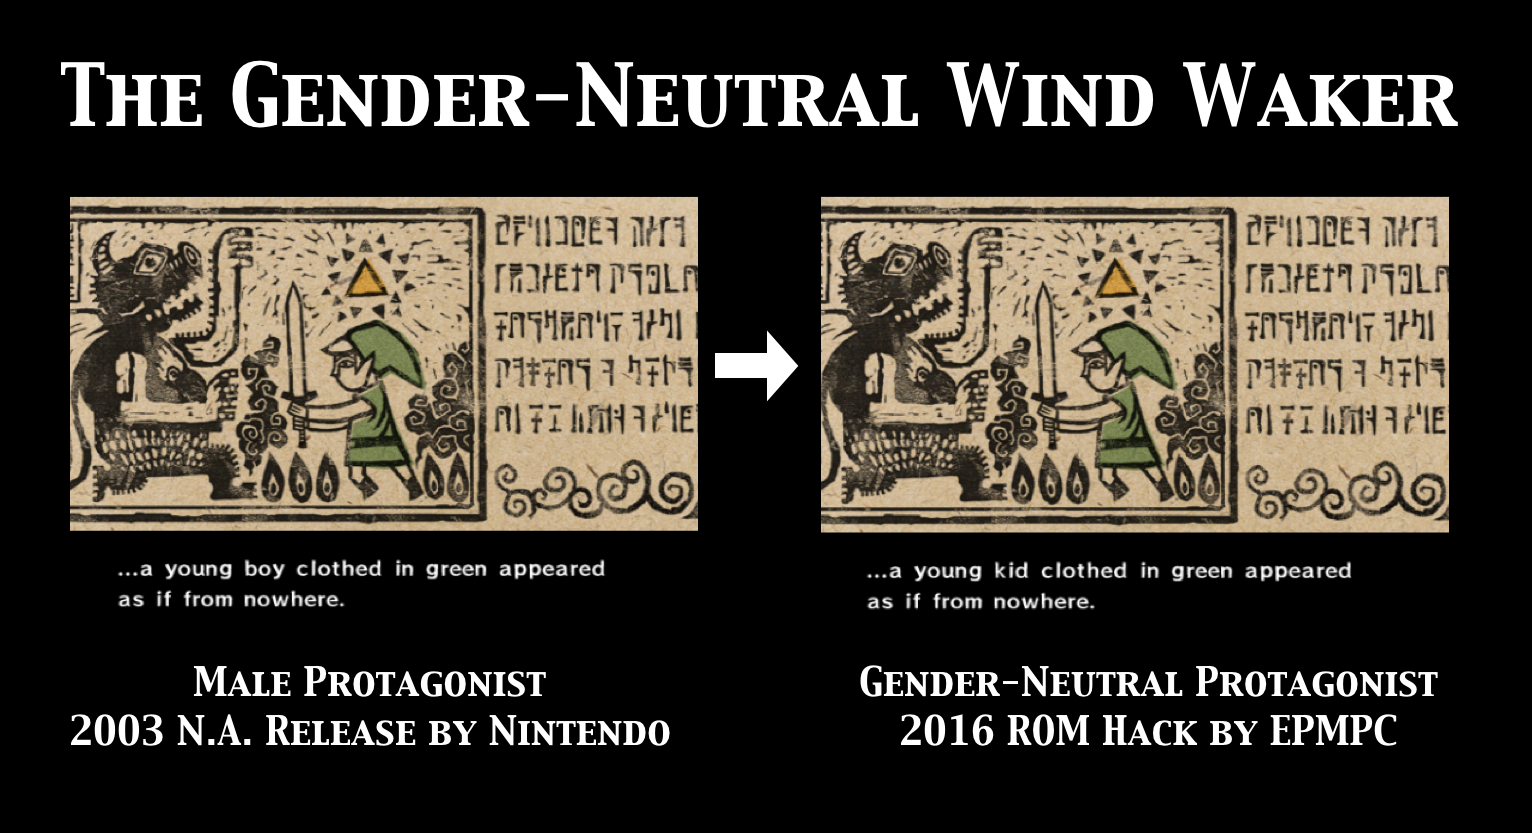 The Gender-Neutral Wind Waker